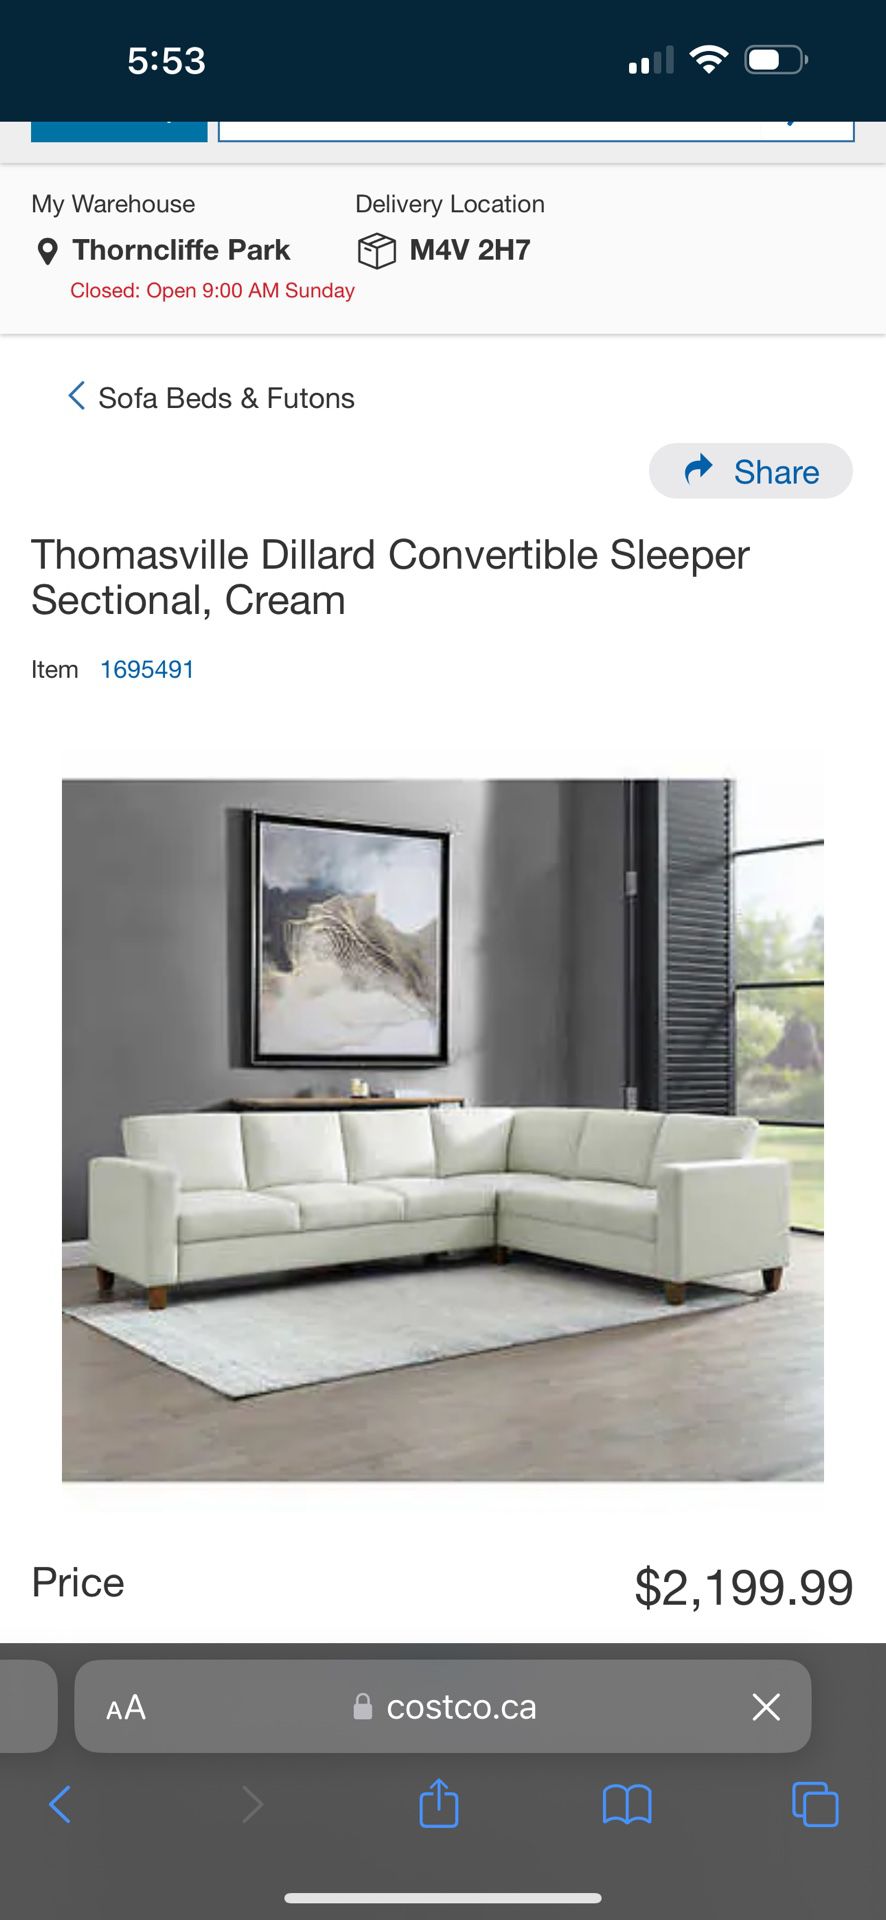 Thomasville Dillard Convertible Sleeper Sectional, Cream